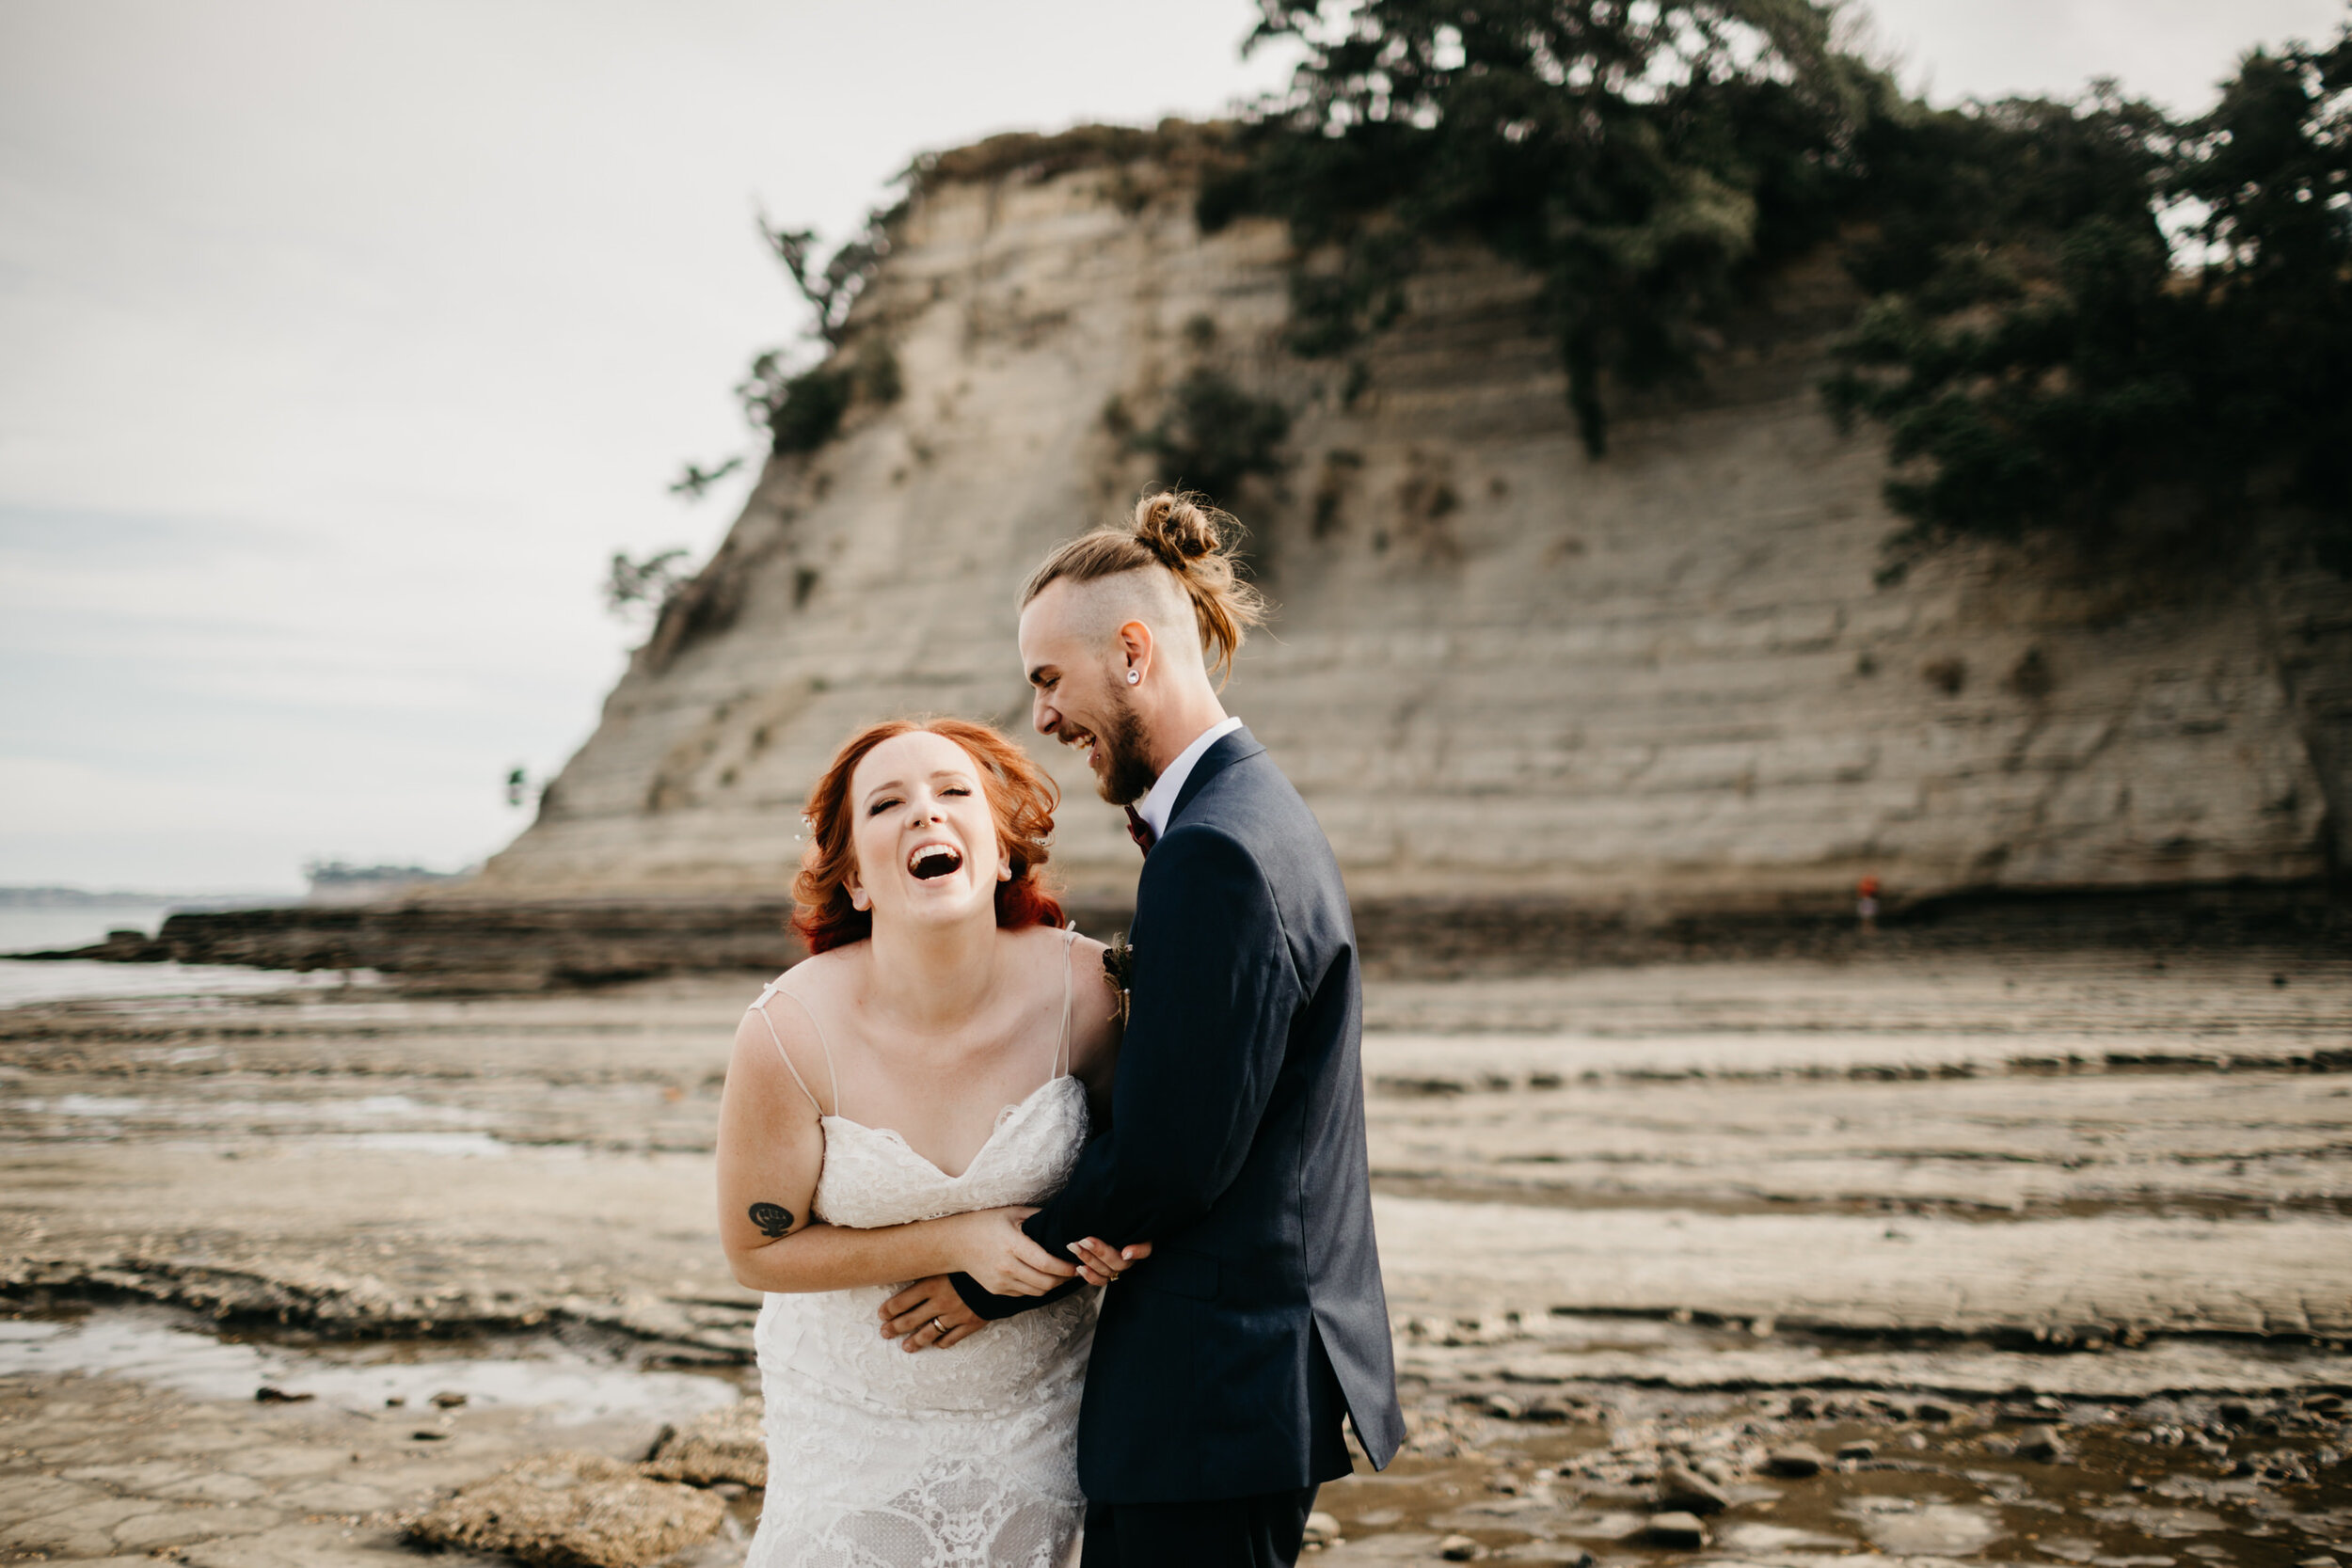 ankles bay wedding photos | Auckland wedding photographer | New Zealand wedding packages | Auckland photography | Indian wedding photographer Auckland | small intimate wedding